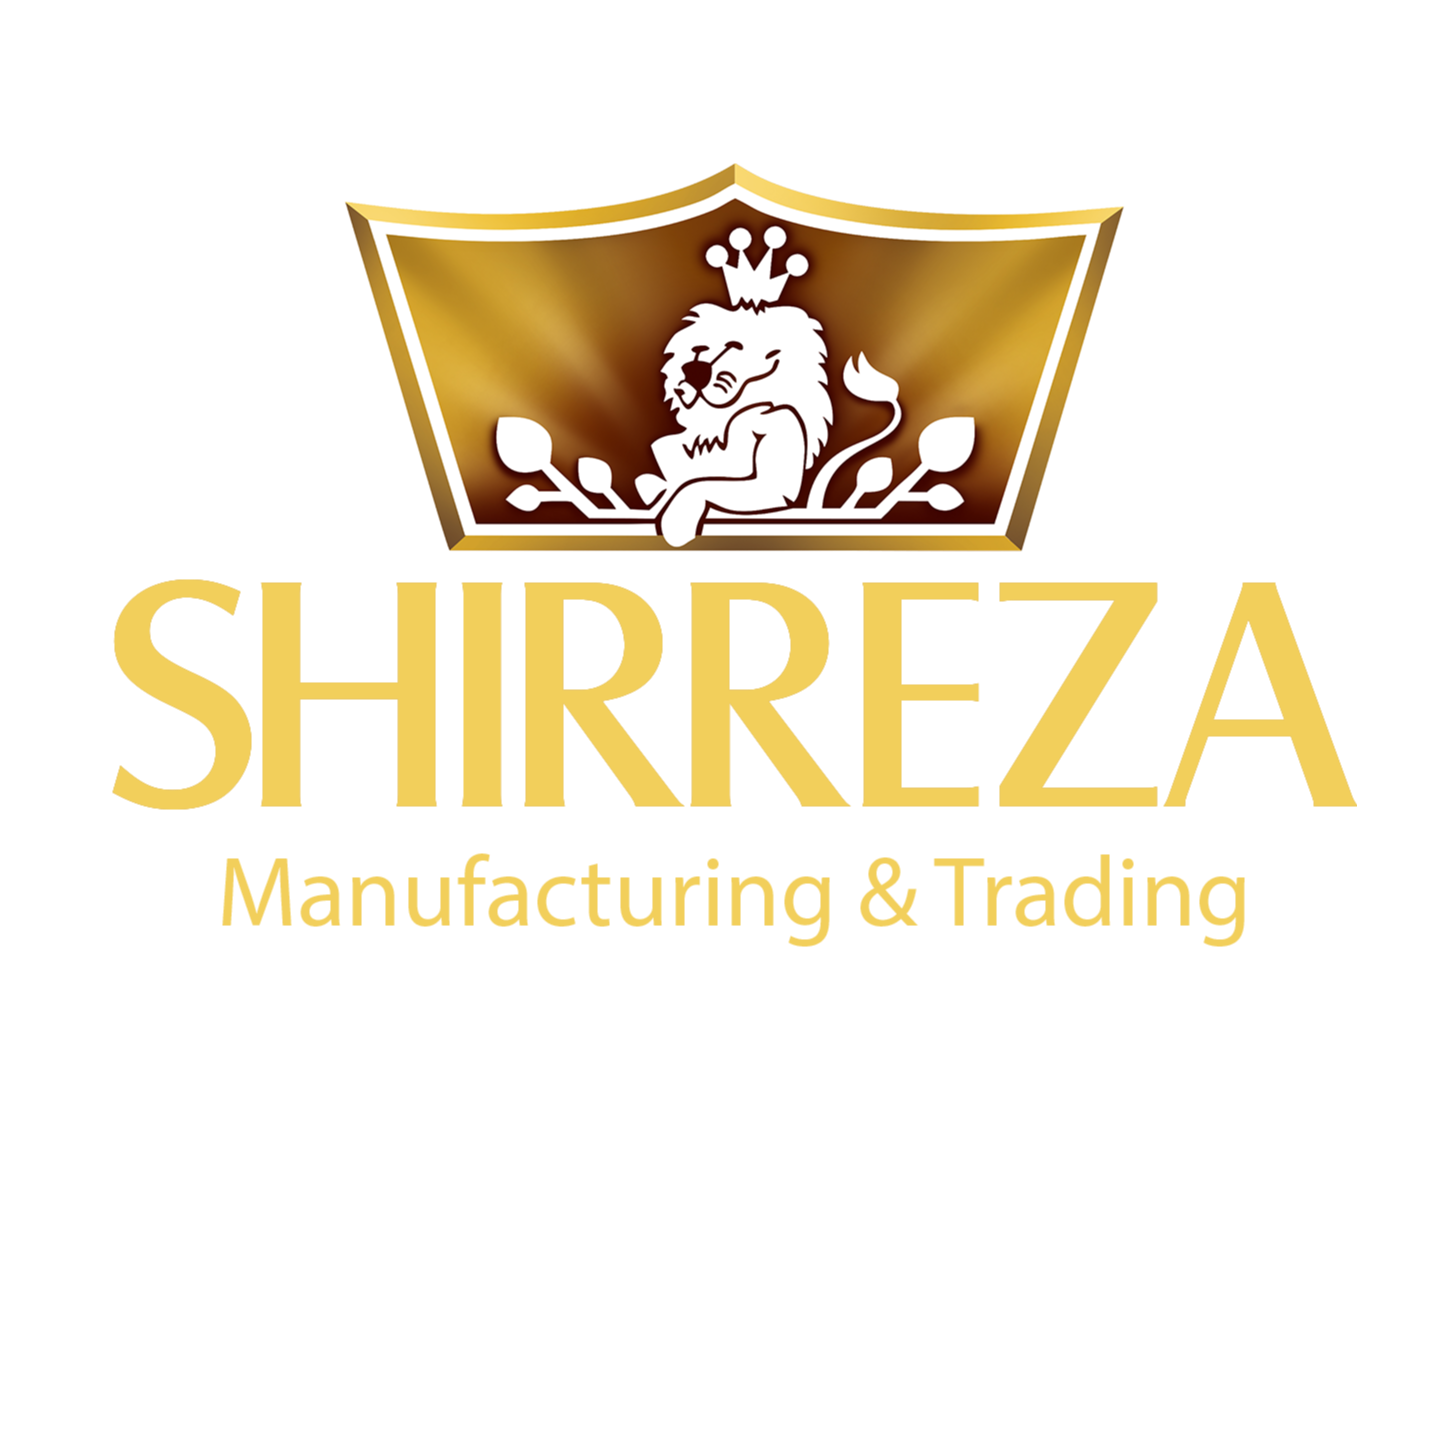 Sesame products | Shirreza manufacturing & trading co